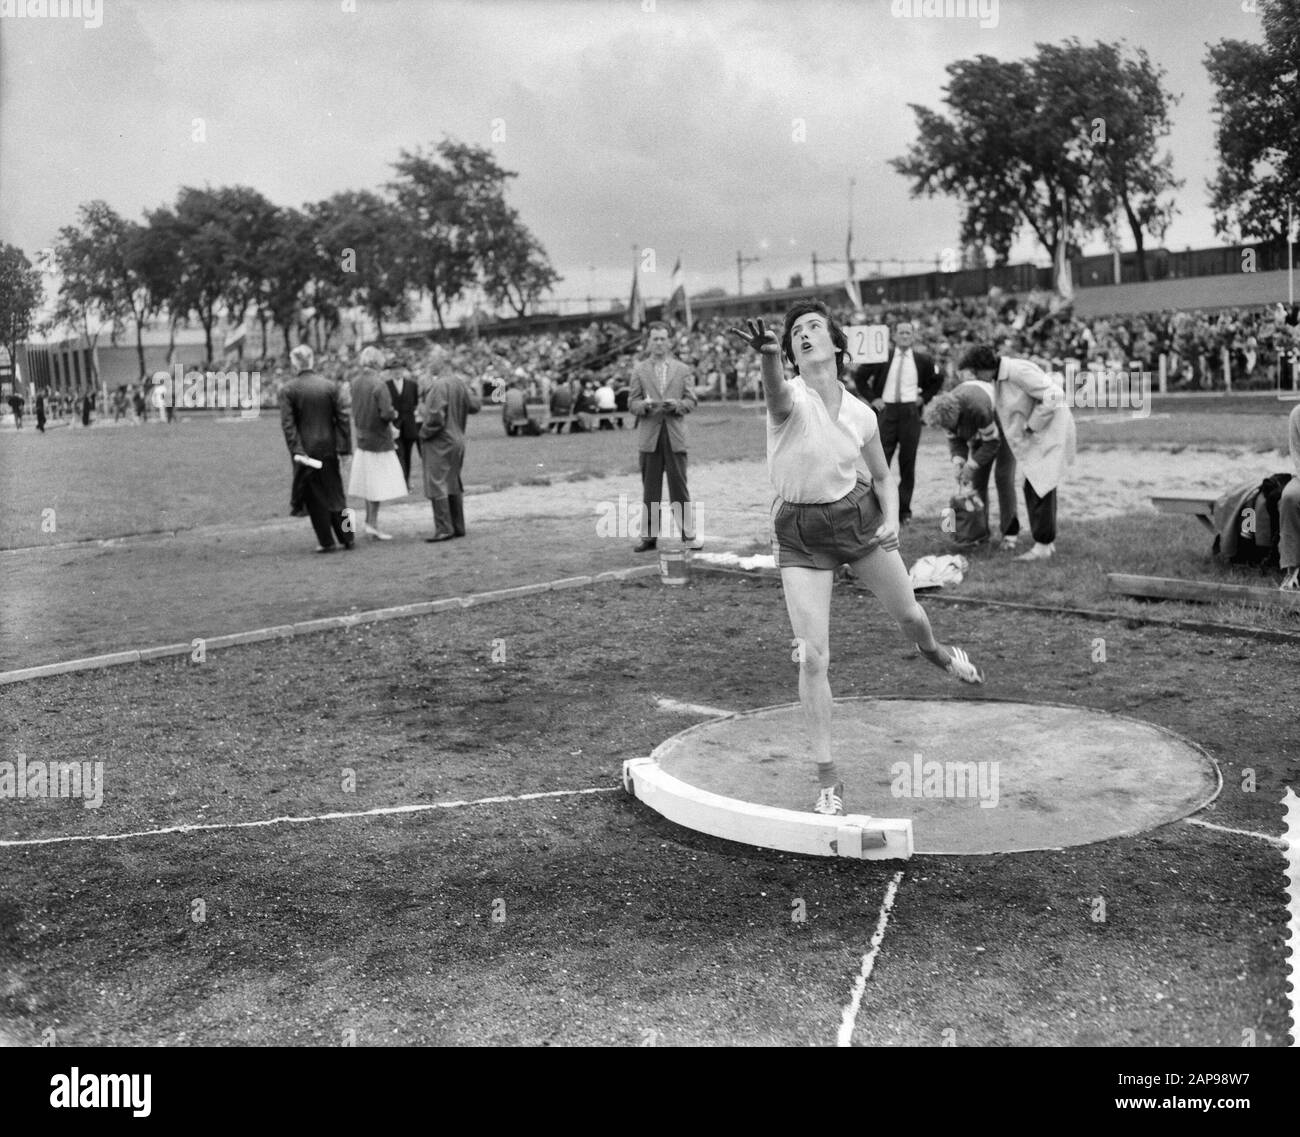 Athletics Championships at the Nenijtobaan in Rotterdam Corry Van de Bosch of Toxandria during bullet shots Date: 12 July 1959 Stock Photo